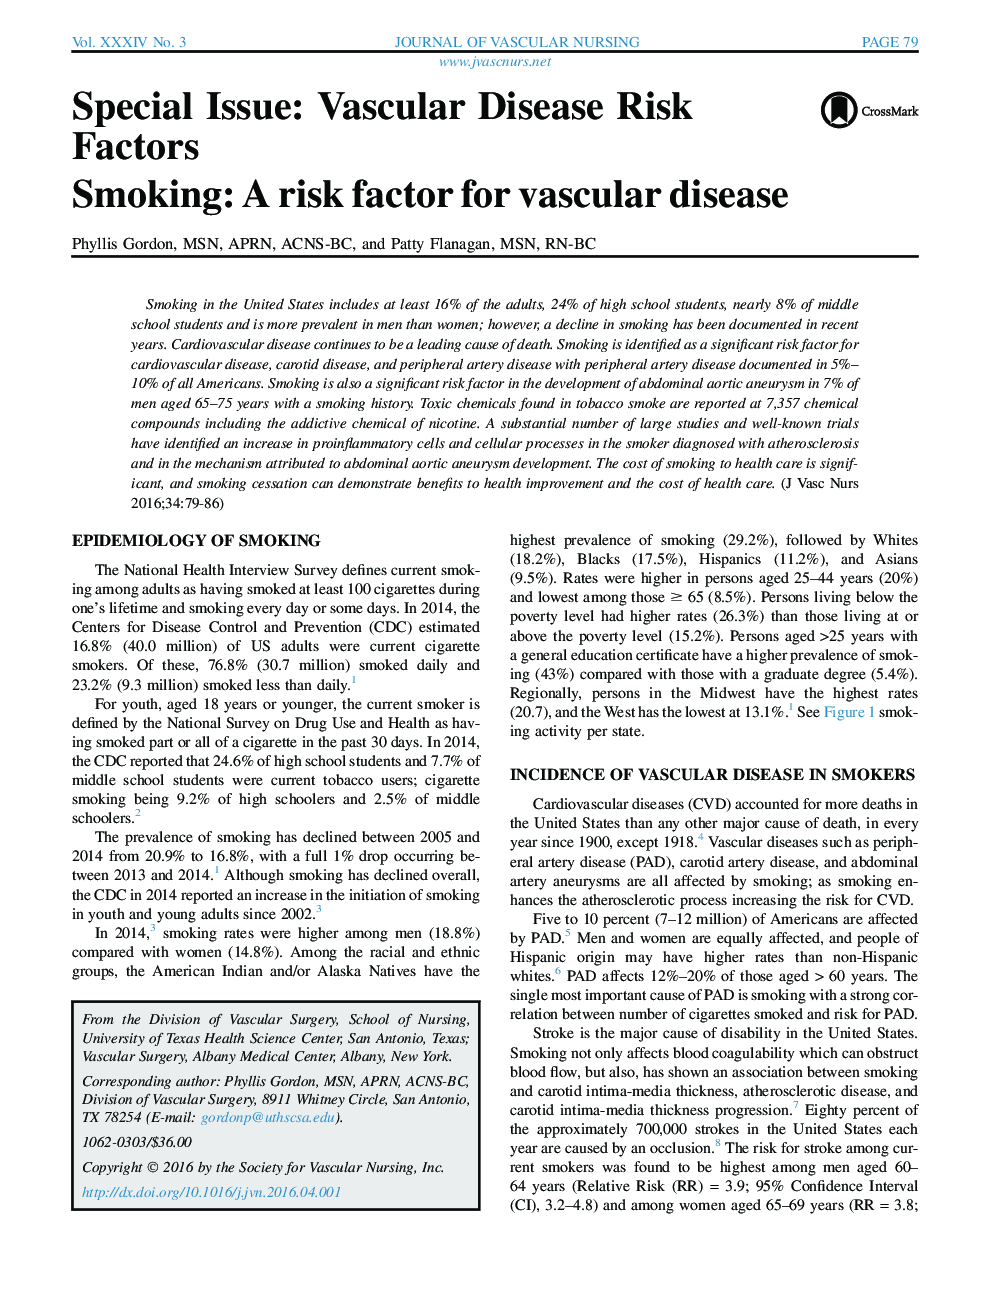 Smoking: A risk factor for vascular disease